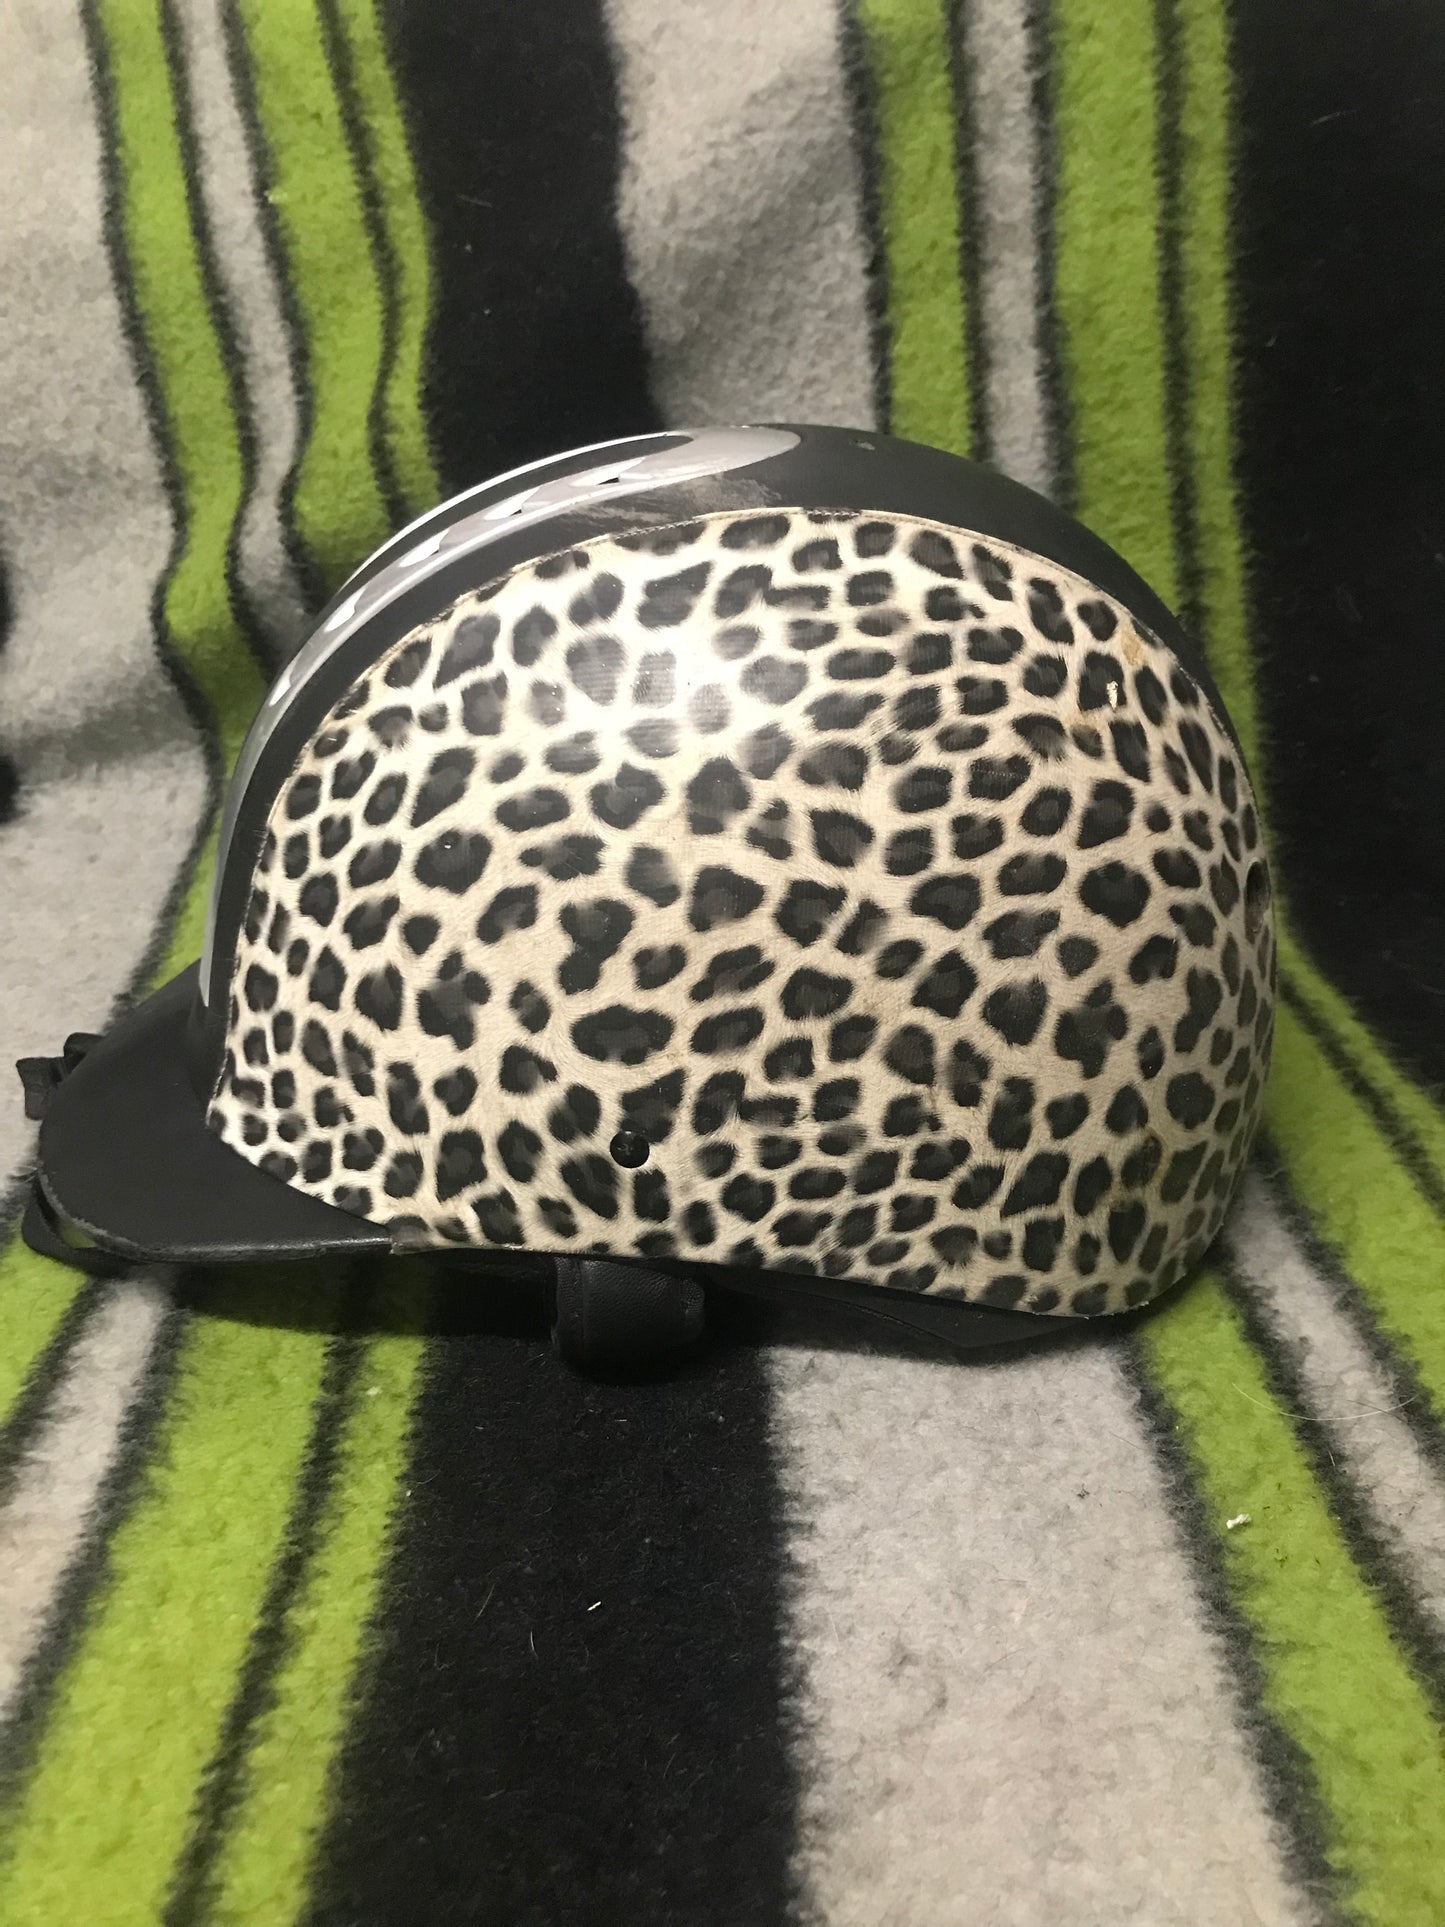 Hkm leopard print riding hat 52cm FREE POSTAGE❤️